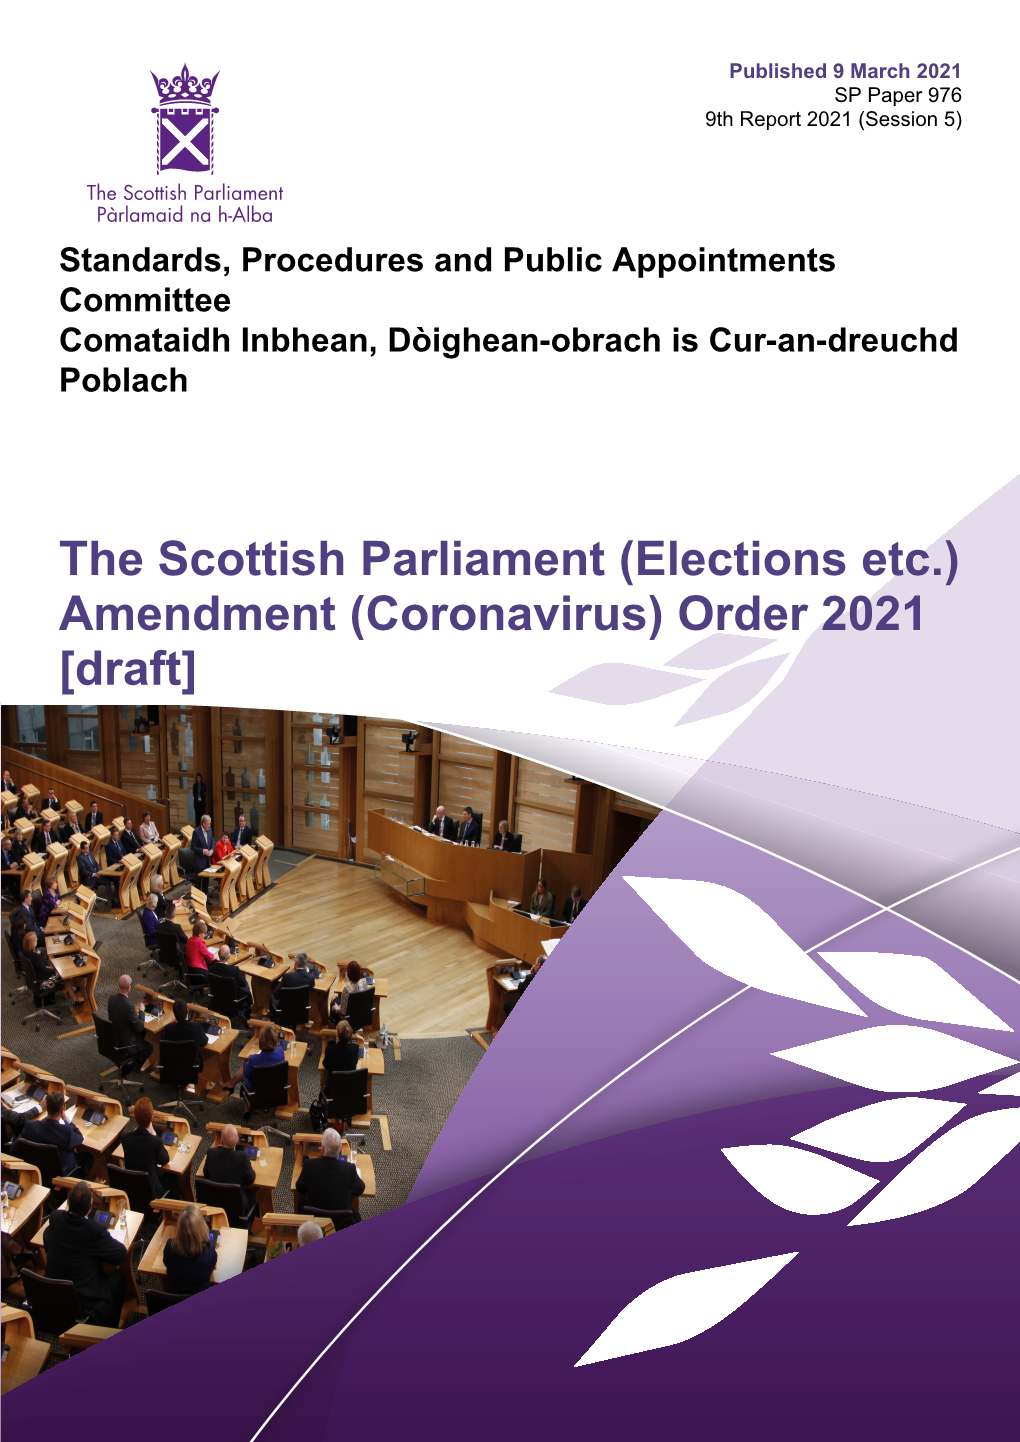 The Scottish Parliament (Elections Etc.) Amendment (Coronavirus) Order 2021 [Draft] Published in Scotland by the Scottish Parliamentary Corporate Body